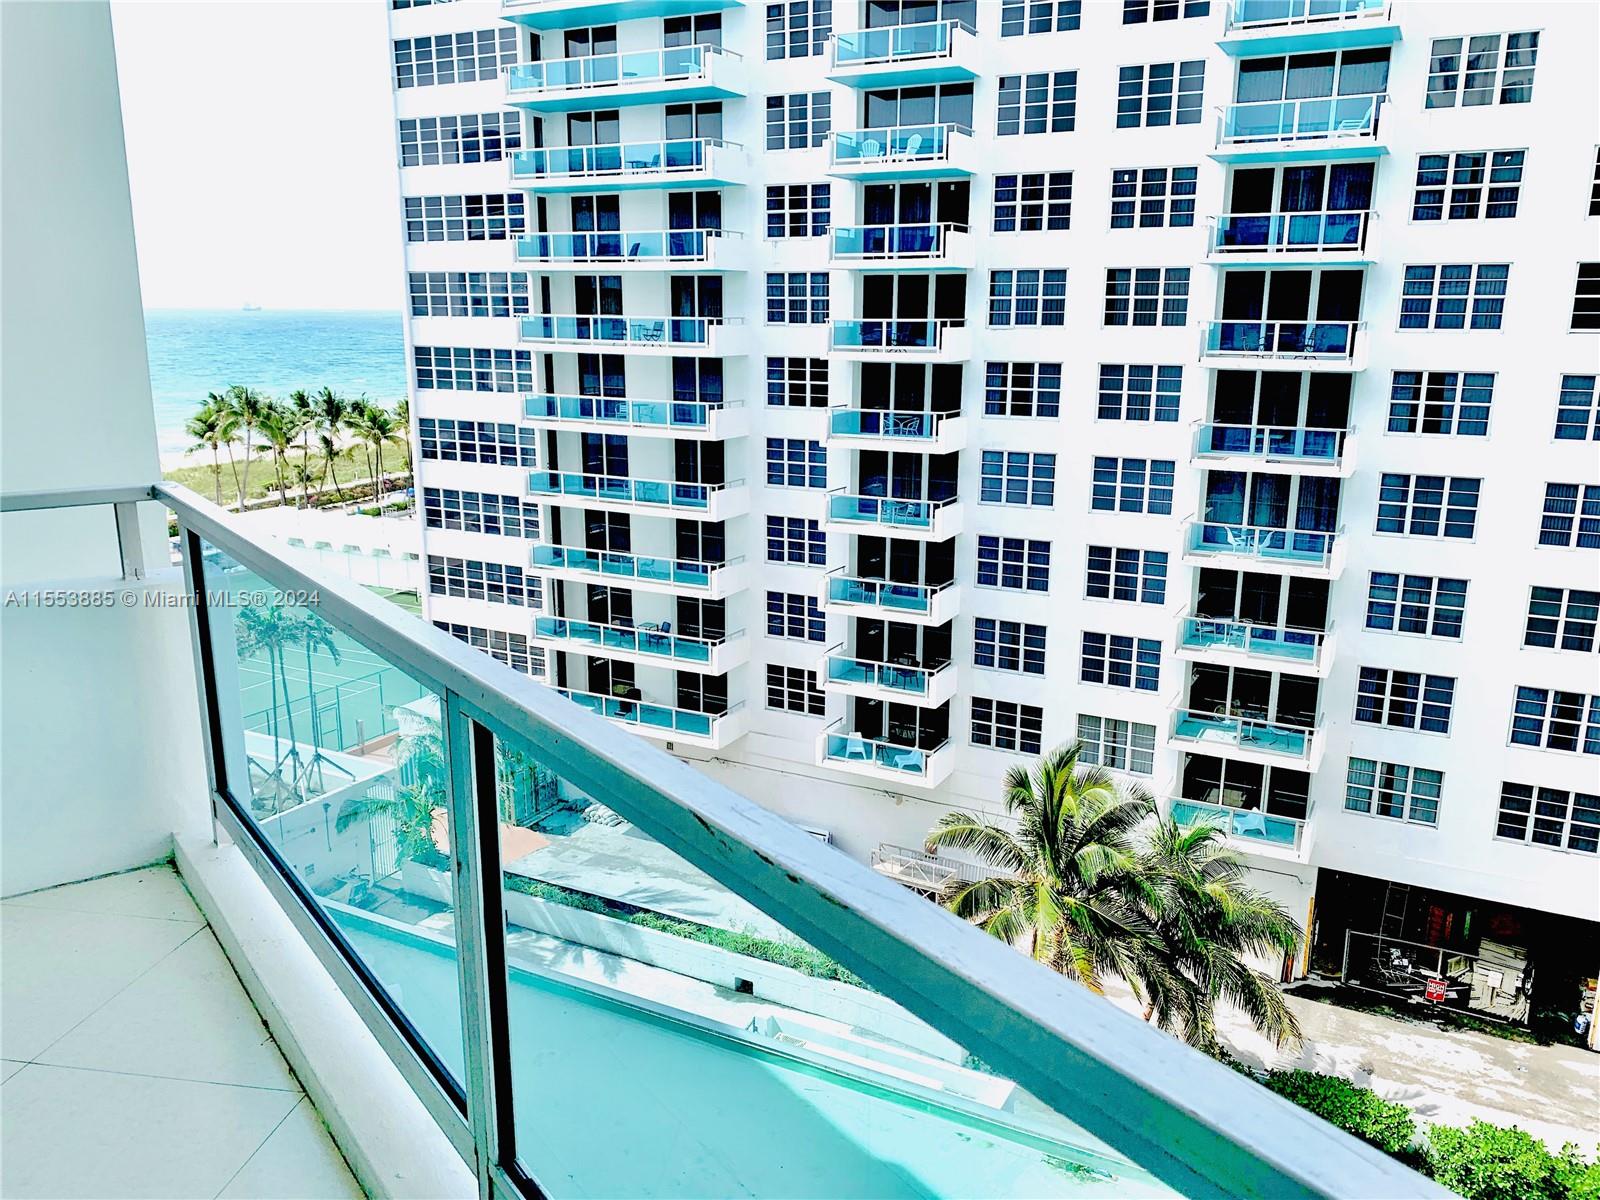 Rental Property at 5151 Collins Ave 828, Miami Beach, Miami-Dade County, Florida - Bedrooms: 2 
Bathrooms: 2  - $3,550 MO.